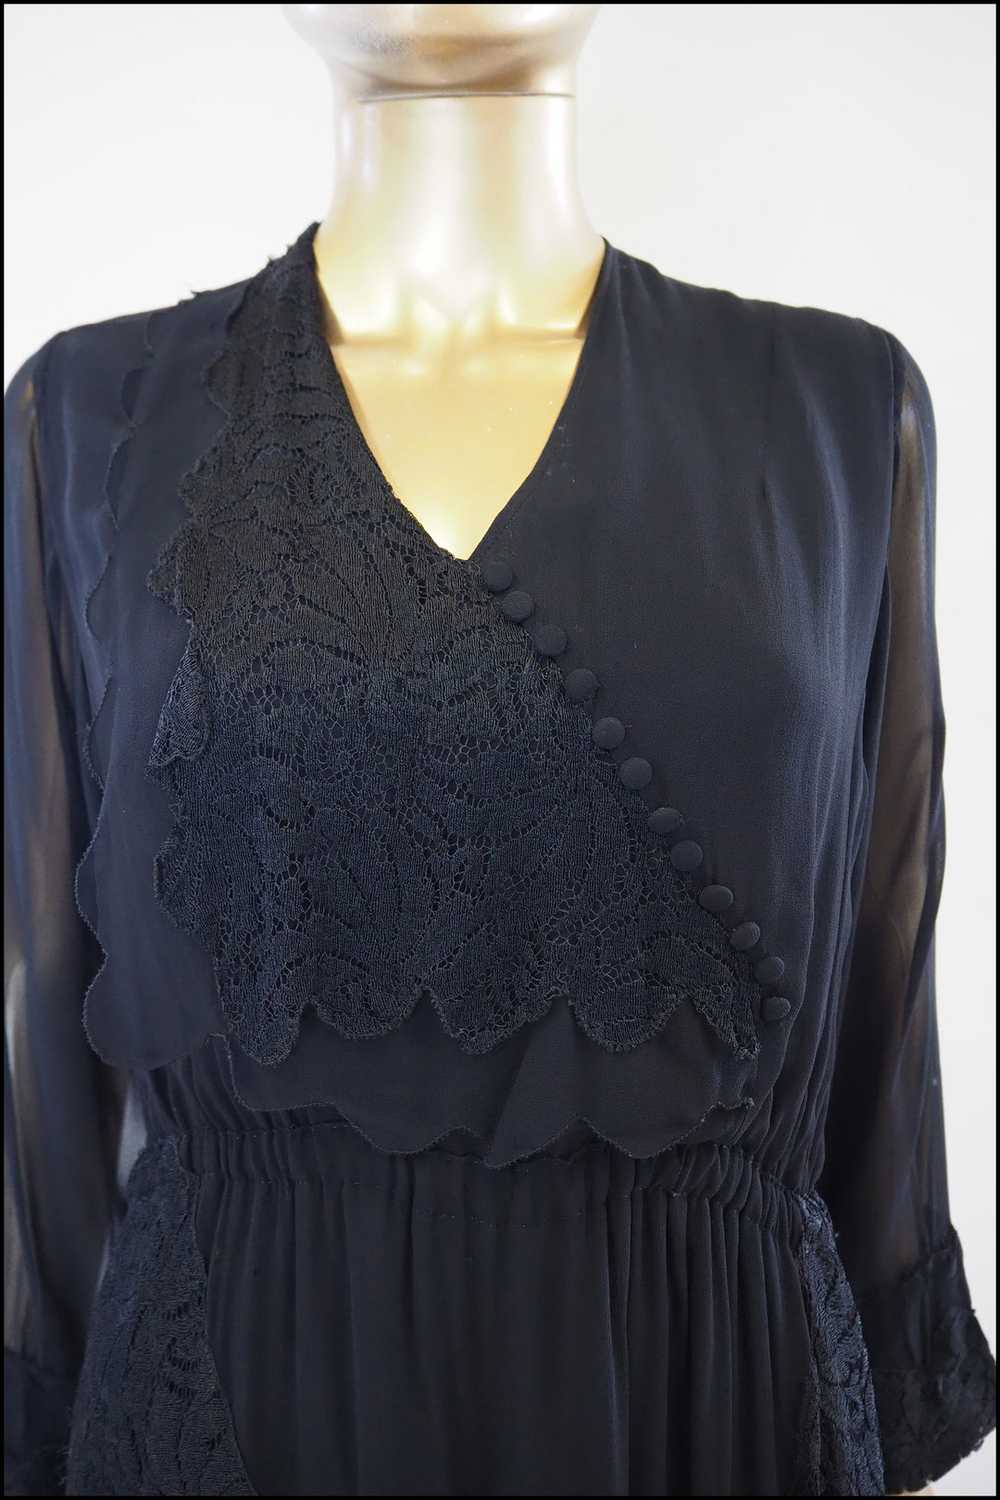 Vintage 1930s Black Chiffon Lace Dress - image 3